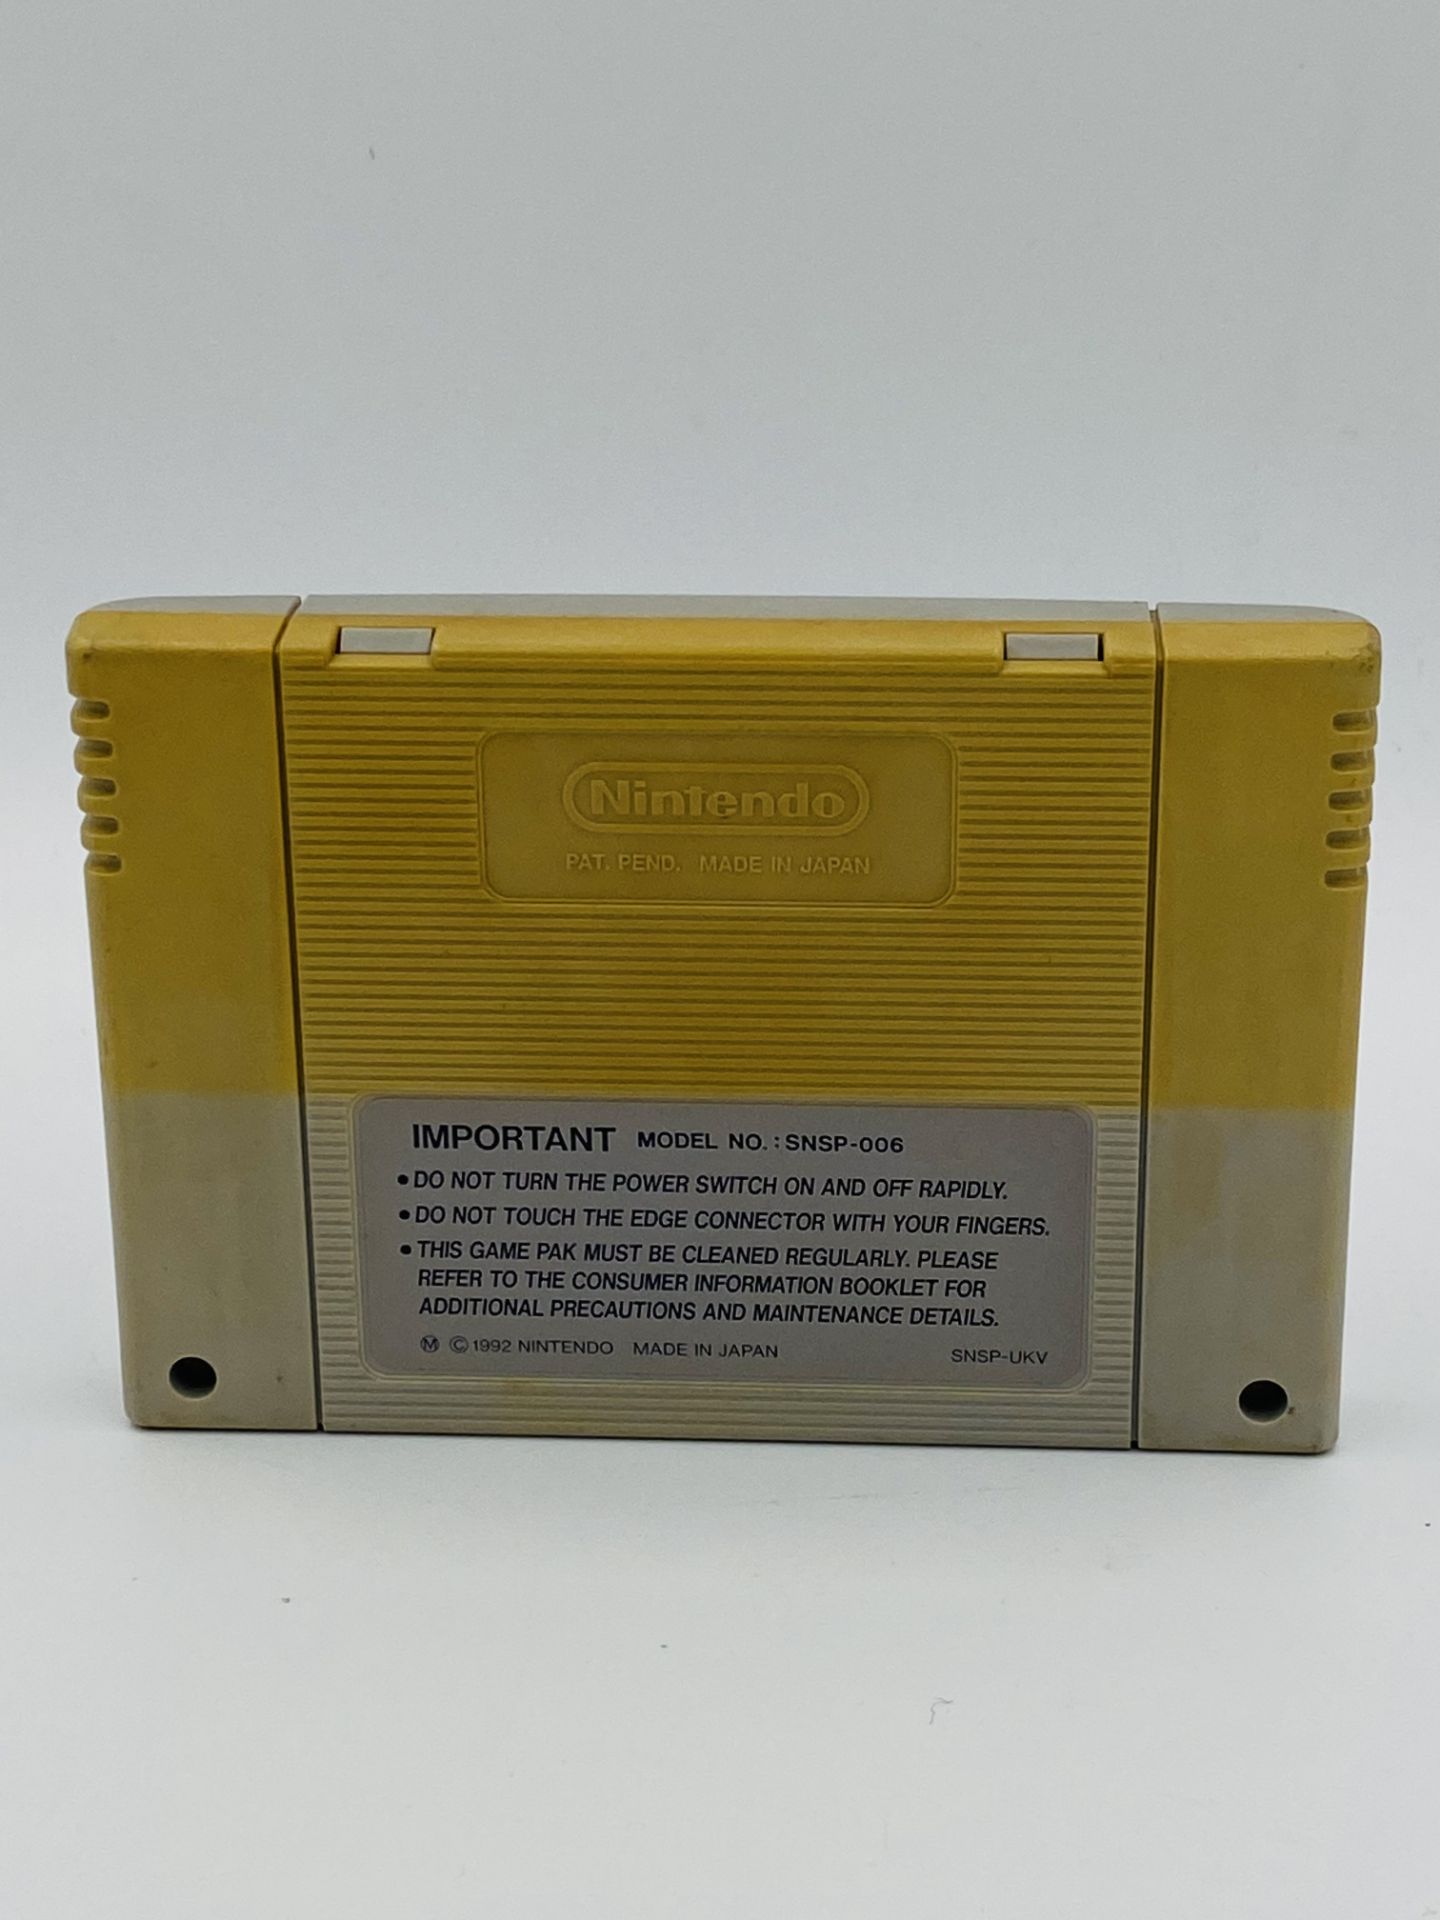 Super Nintendo Entertainment System Super Mario Kart Pal version, boxed - Image 5 of 5